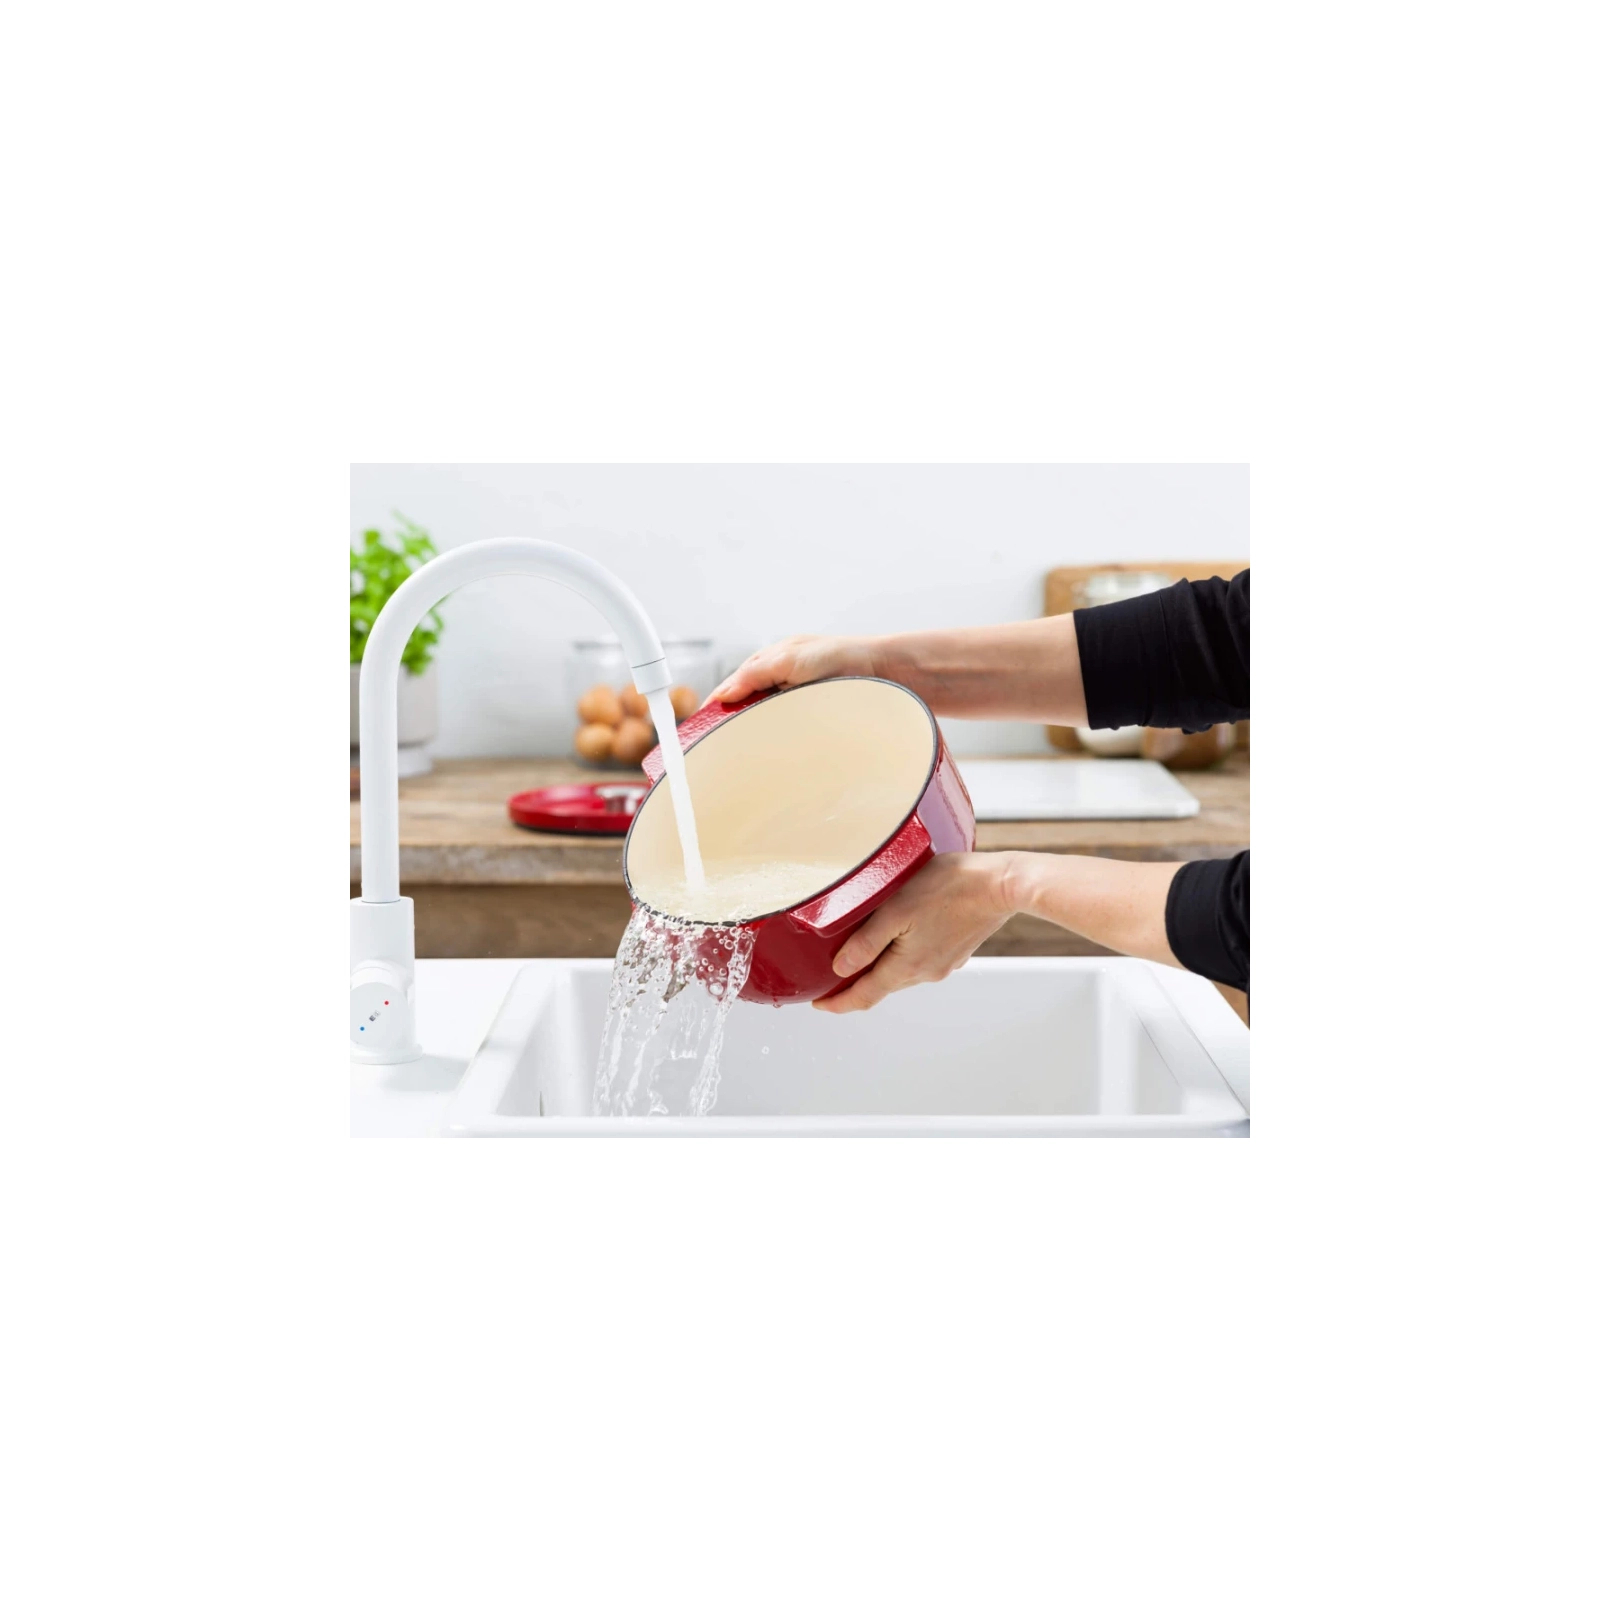 Кастрюля KitchenAid чавунна з кришкою 3,3 л Червона (CC006057-001) изображение 9